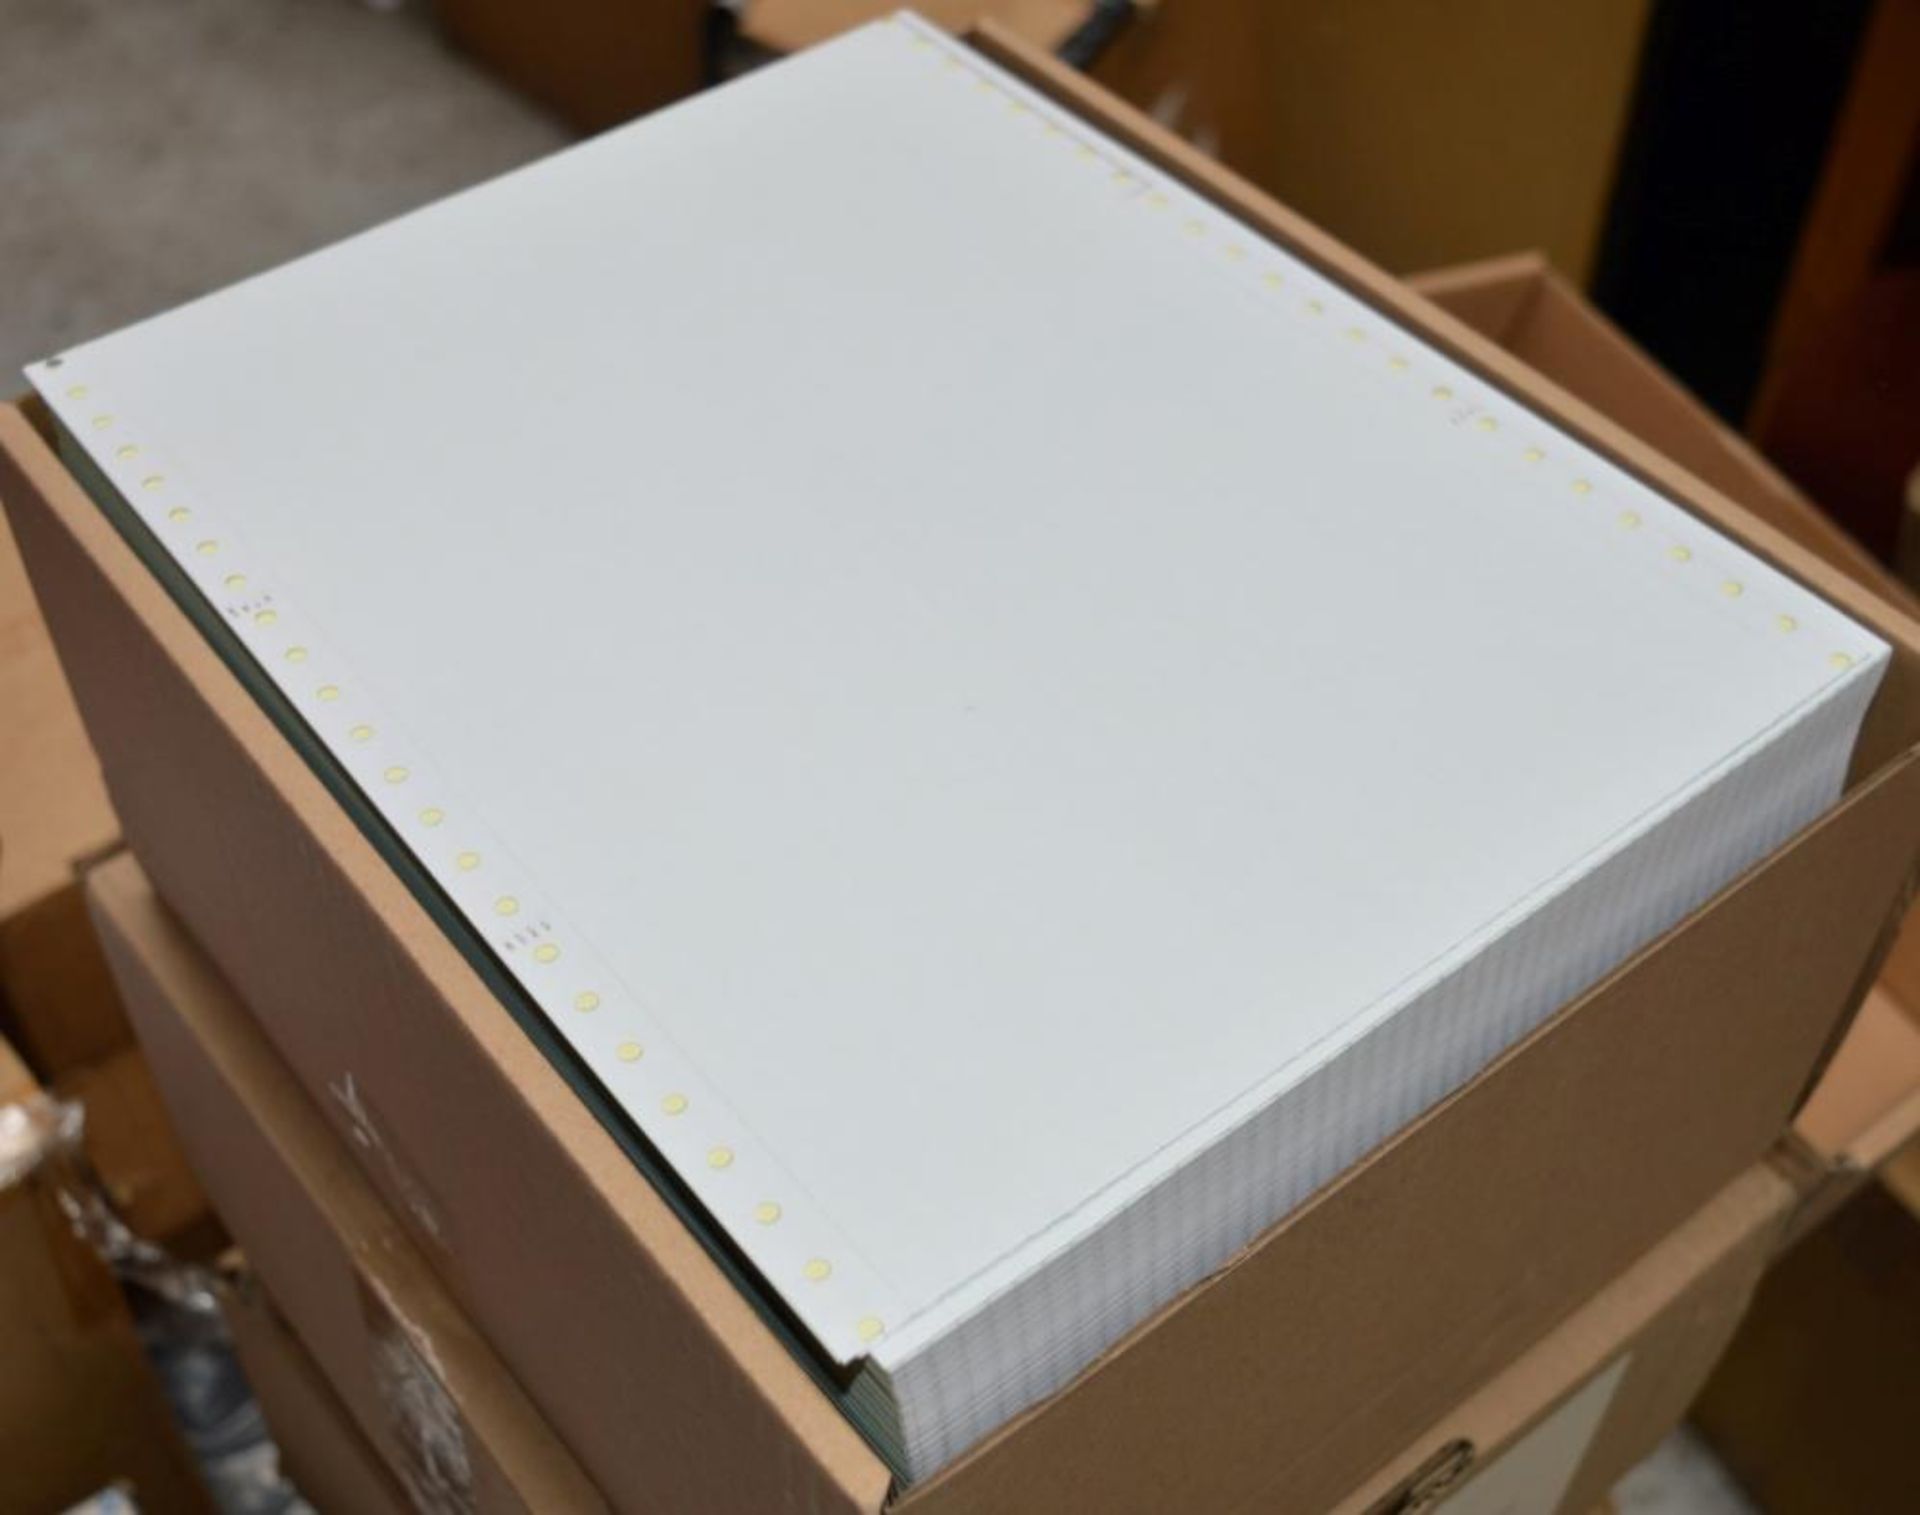 3 x Boxes of Continuous 3 Part Delivery Note Paper Sets - Plain - Quantity 750 Per Box - New Boxed